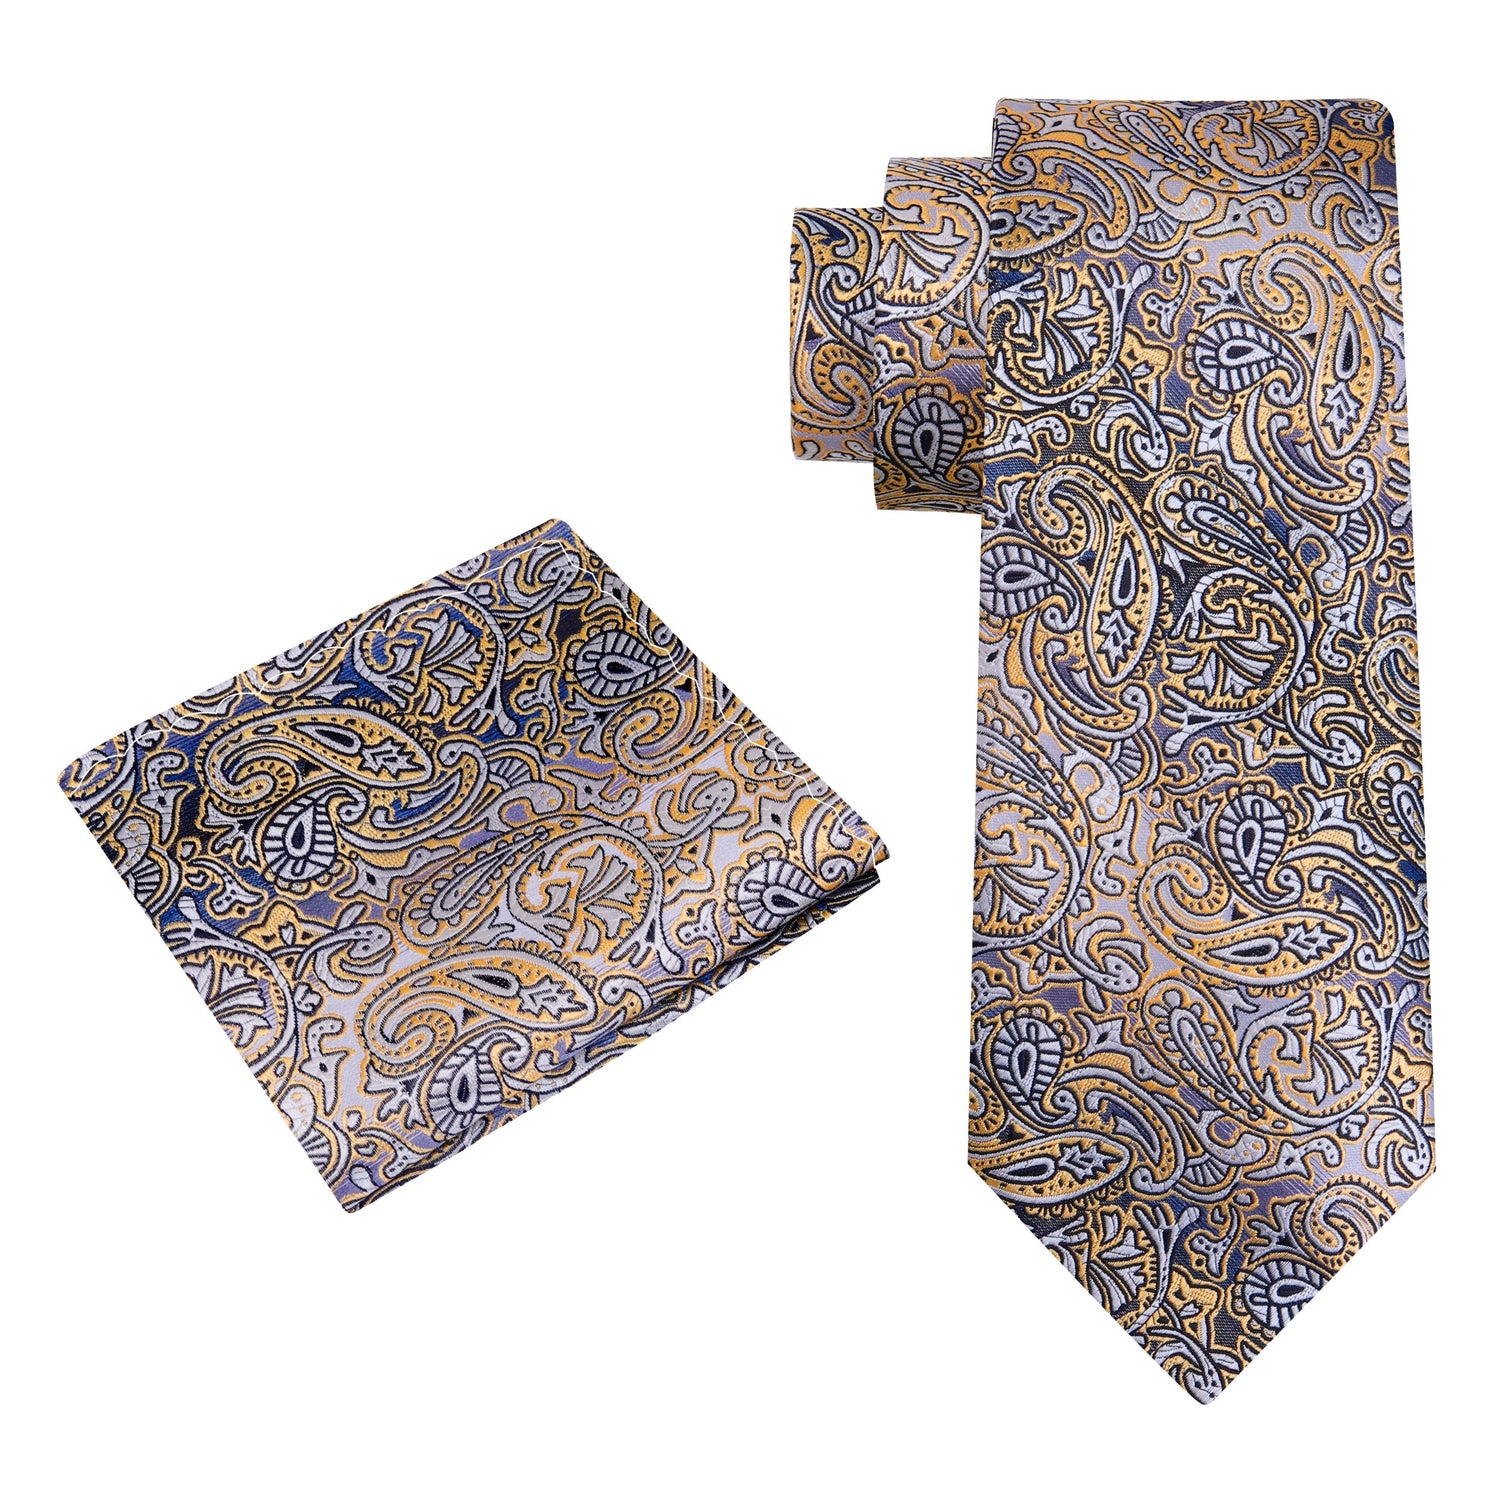 Alt view: A Black, Tan, Grey Paisley Pattern Silk Necktie, Matching Pocket Square